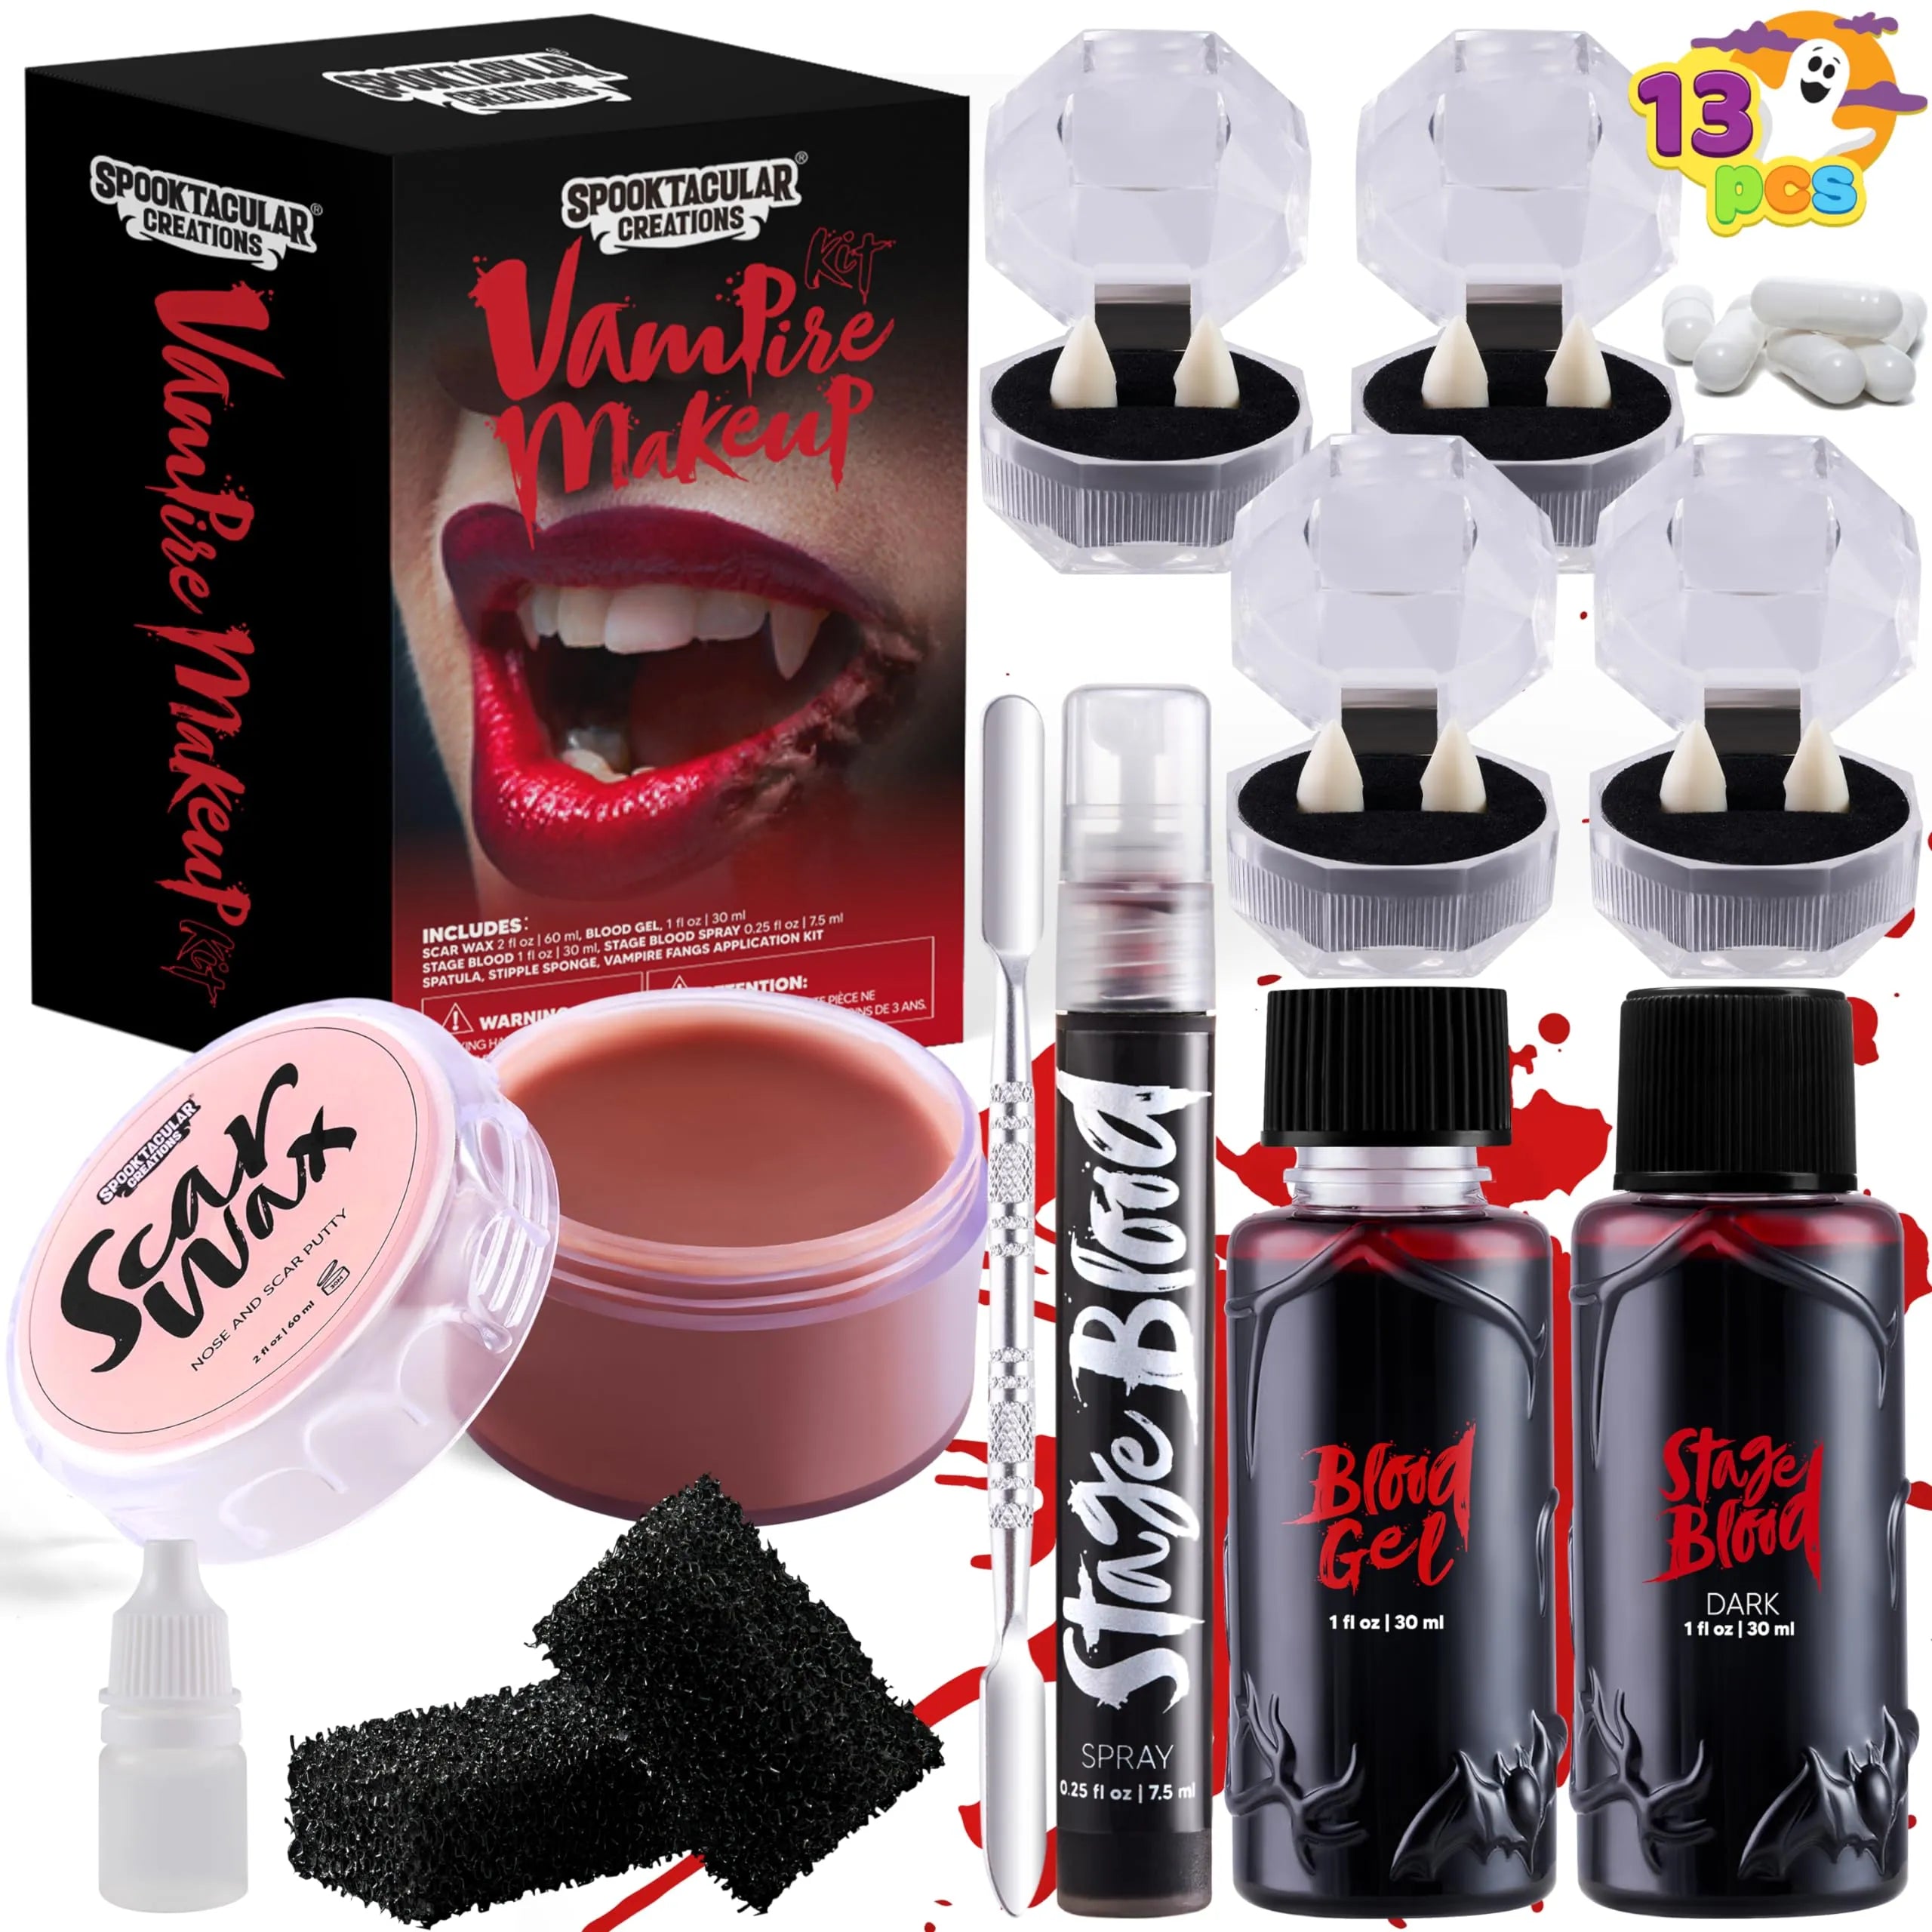 Kit maquillage vampire